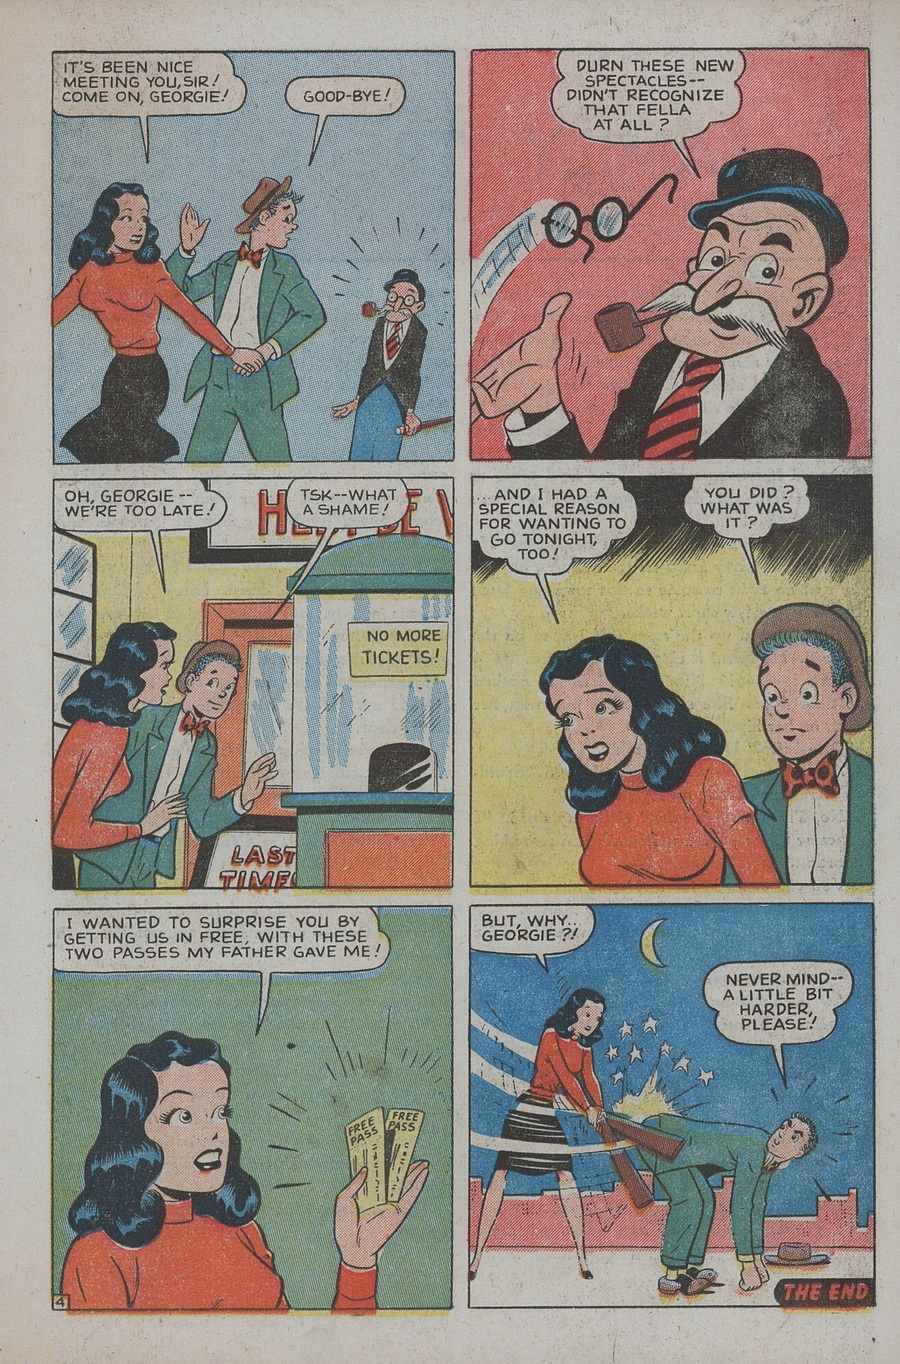 Teen Comics #31 story page 3